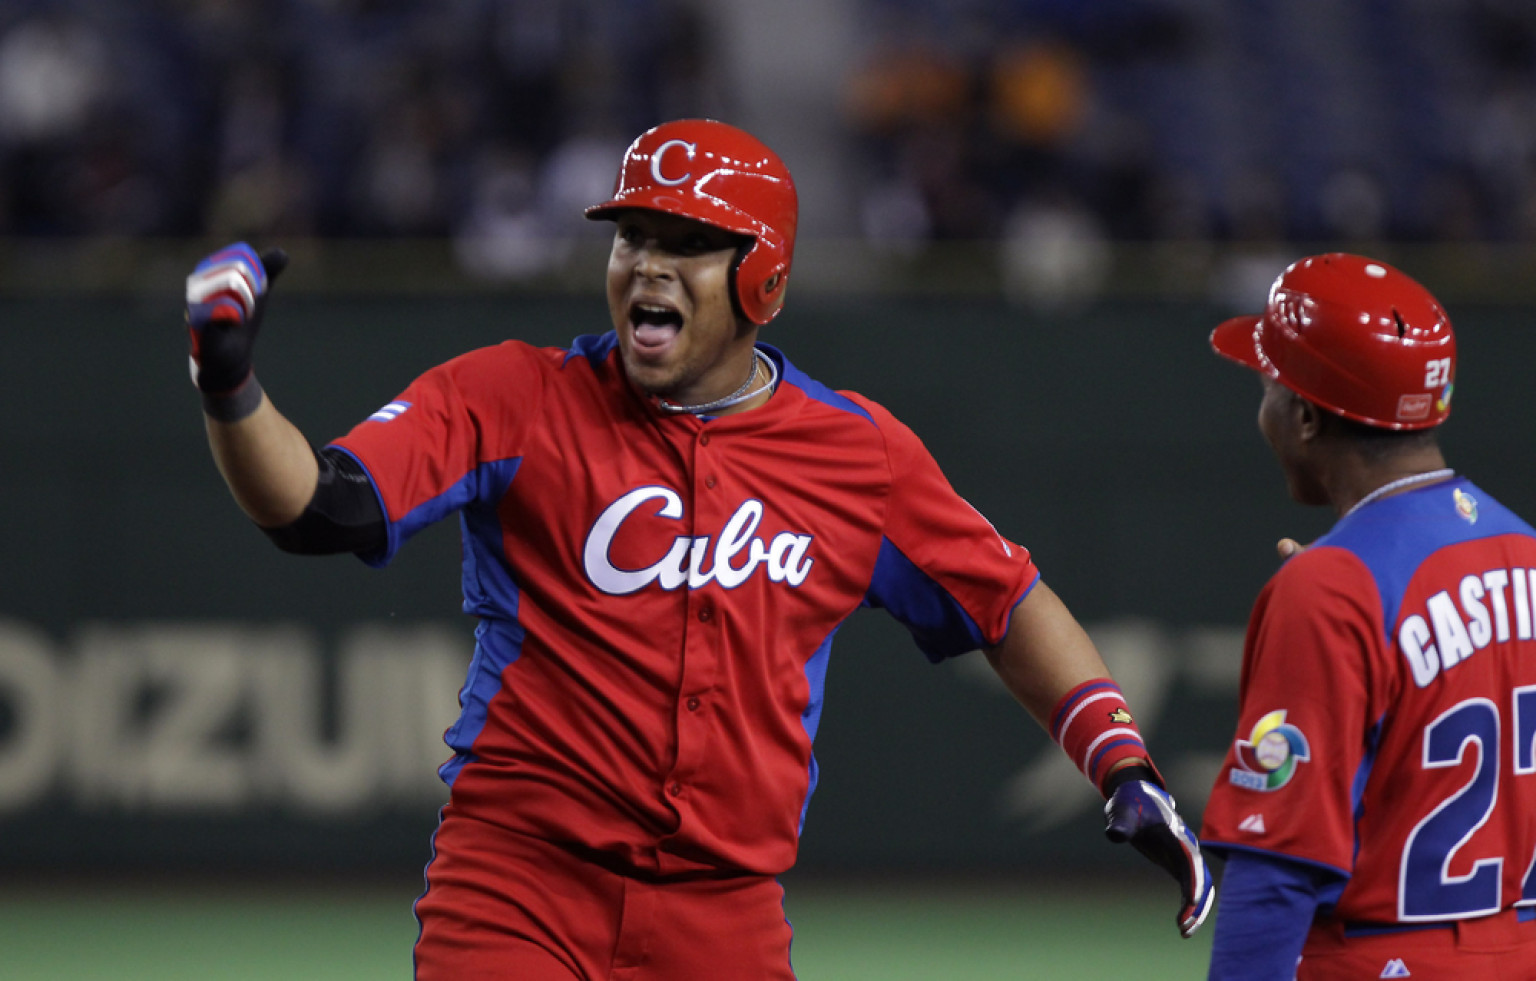 Baseball and Cuba Legal travel to Cuba